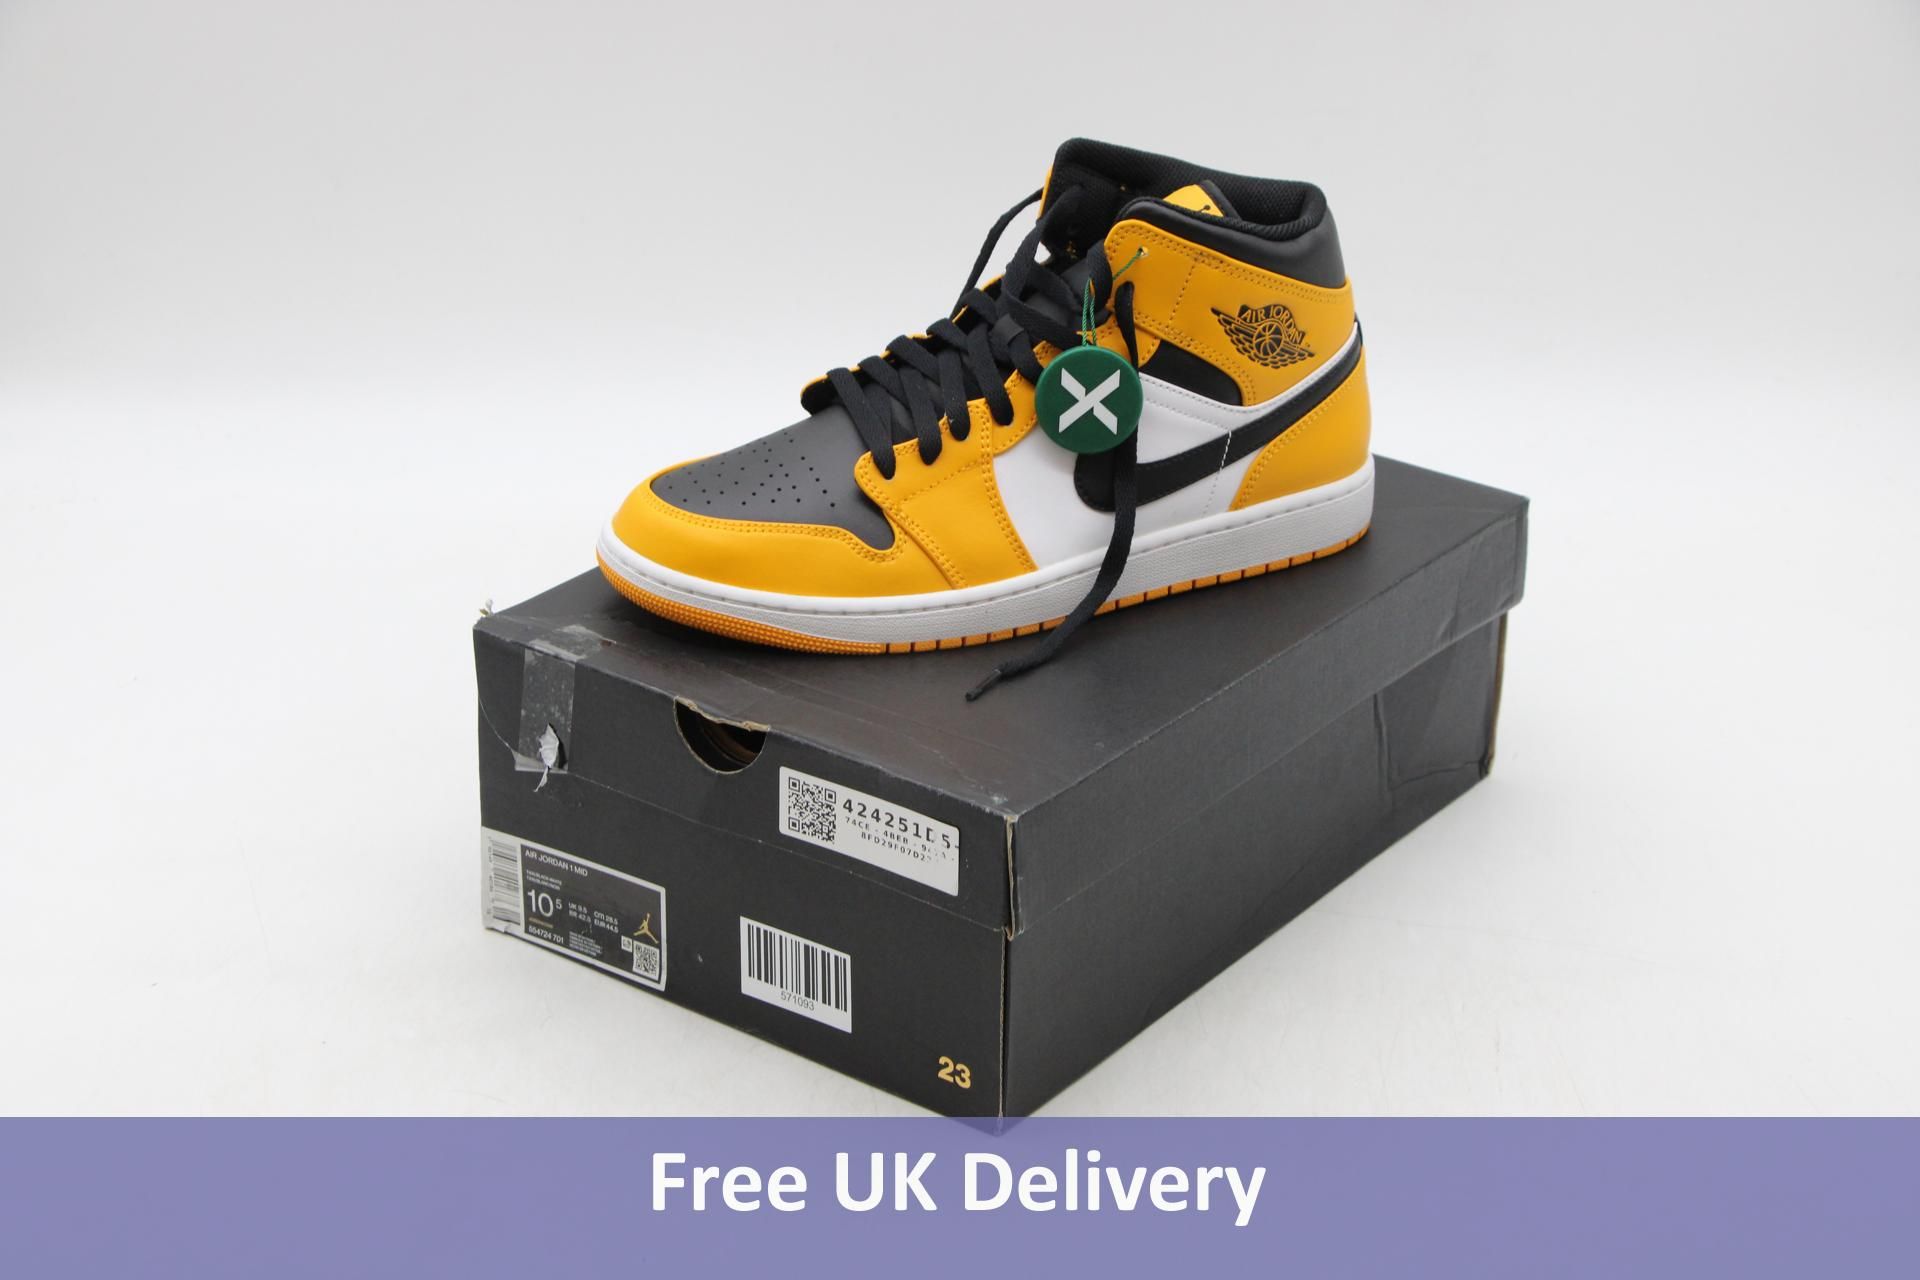 Nike Air Jordan 1 Mid, Taxi Yellow/Black/White, UK 9.5